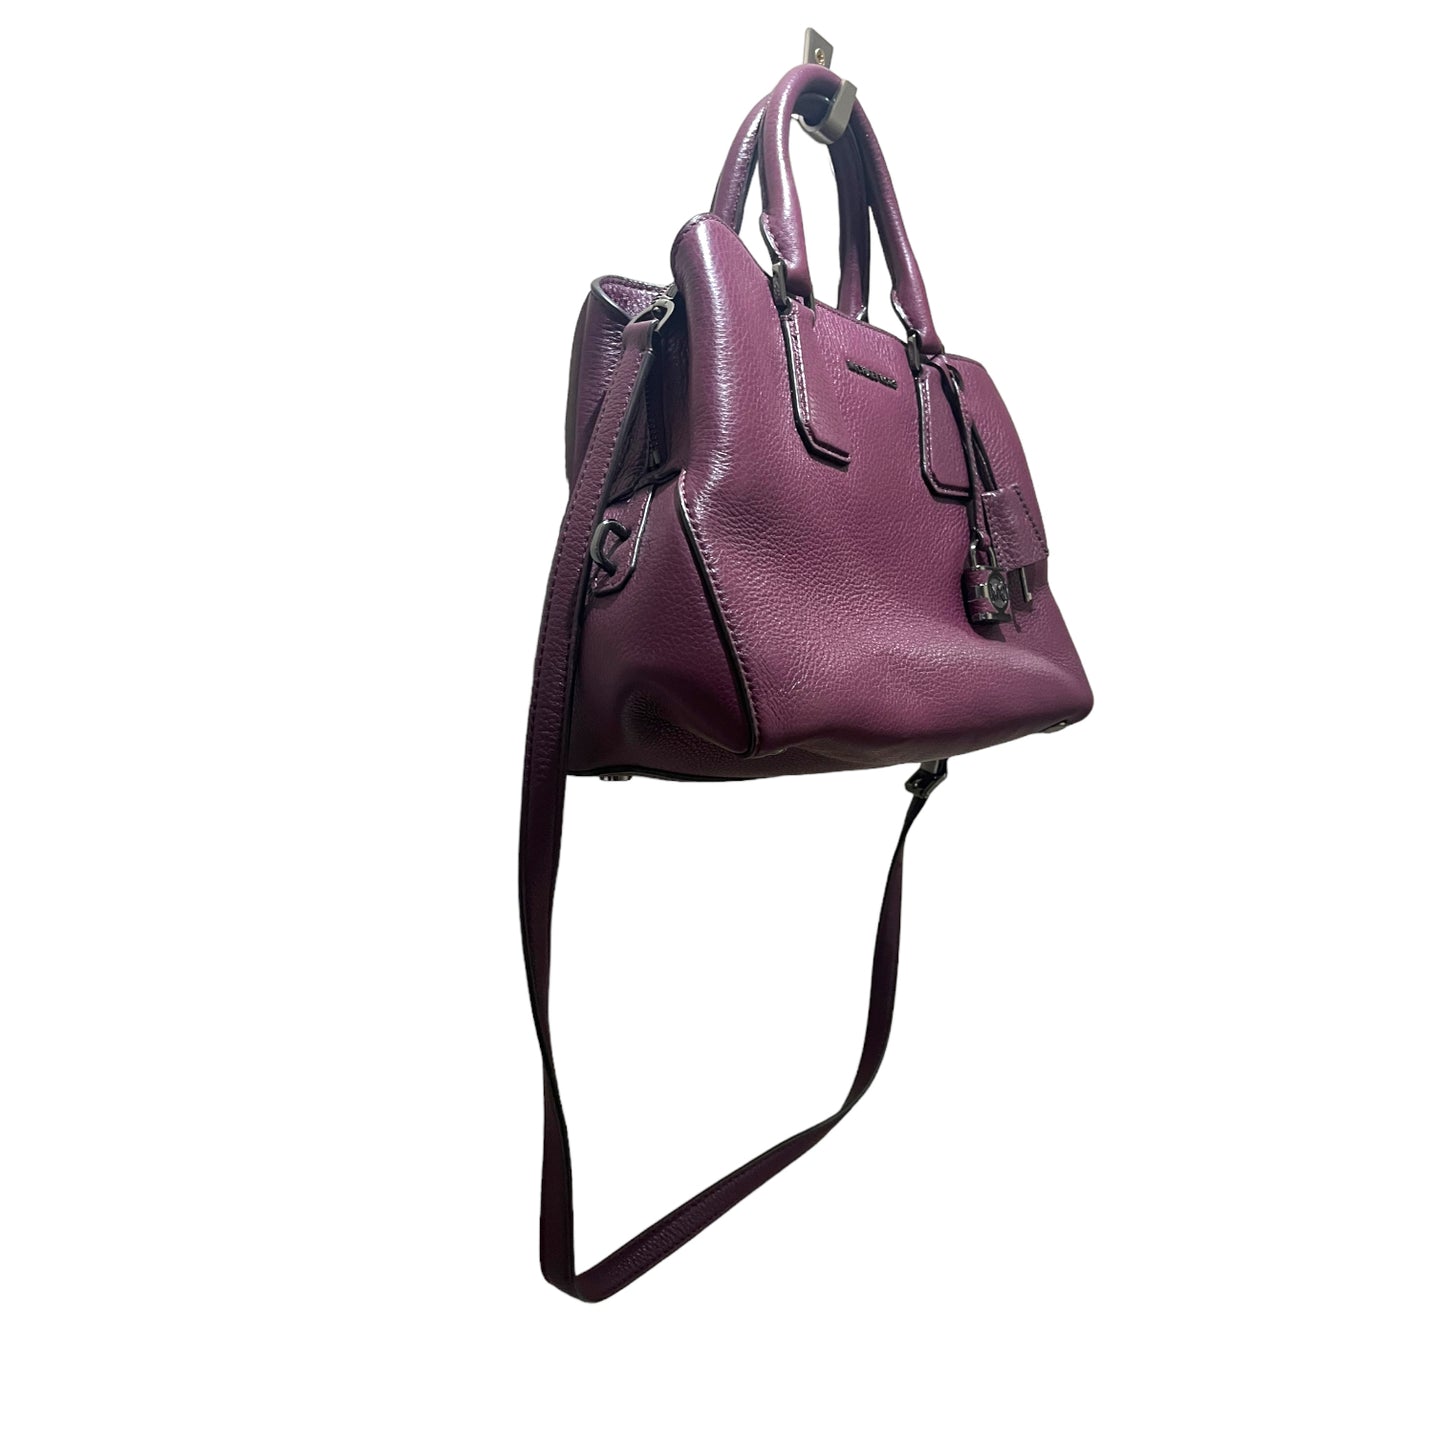 Michael Kors Purple Bag